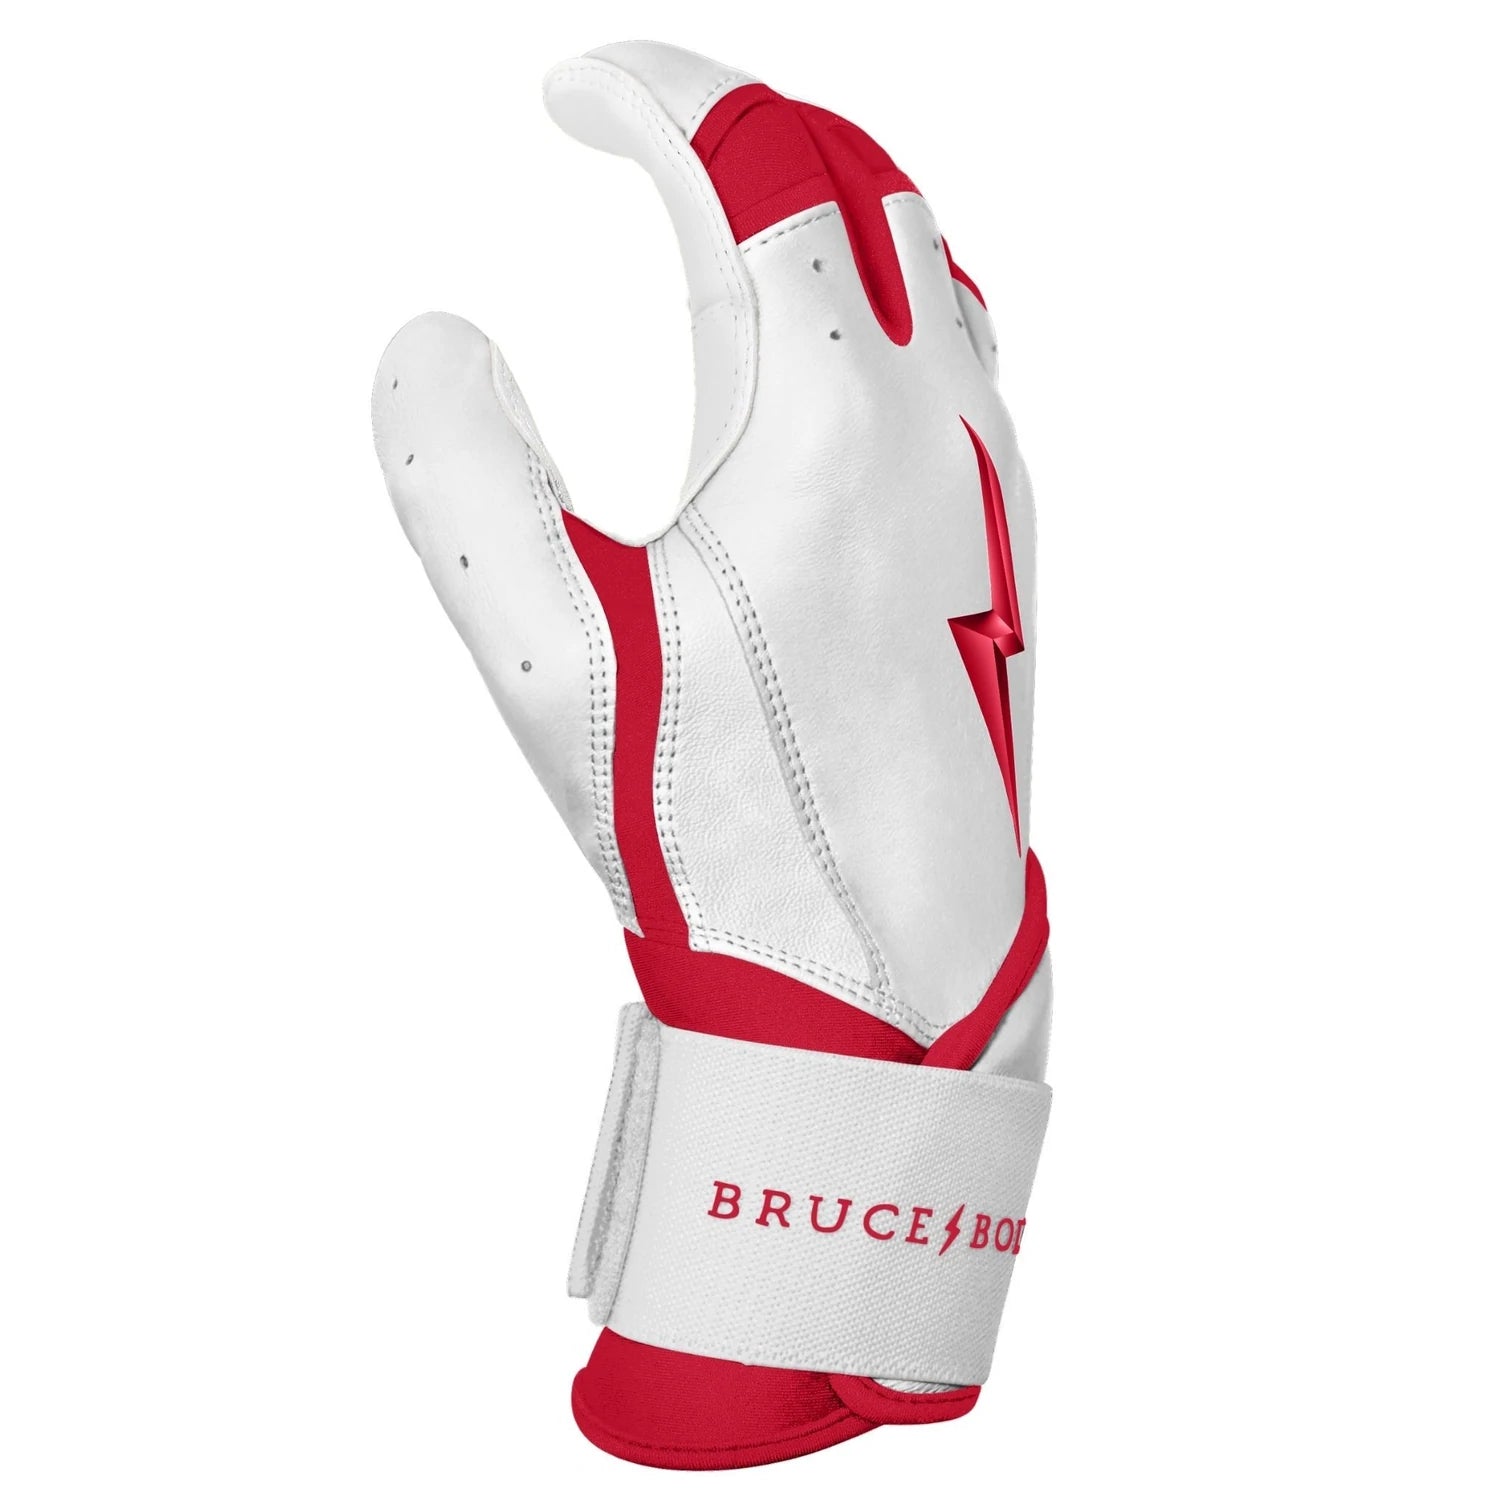 Bruce Bolt - BADER Series Youth Long Cuff Batting Gloves | BADER WHITE